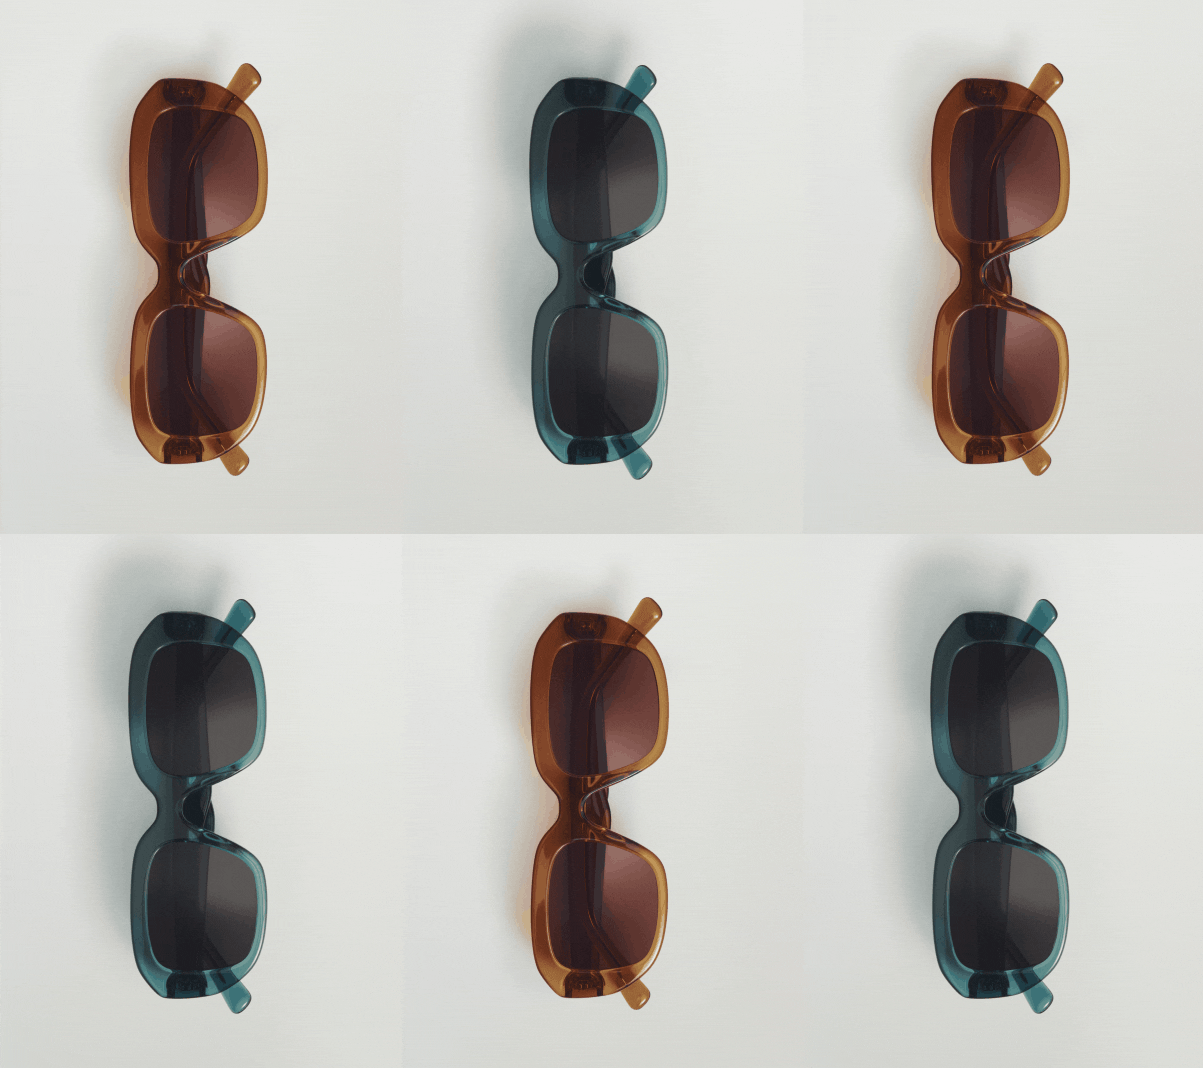 Sunglasses | Massimo Dutti